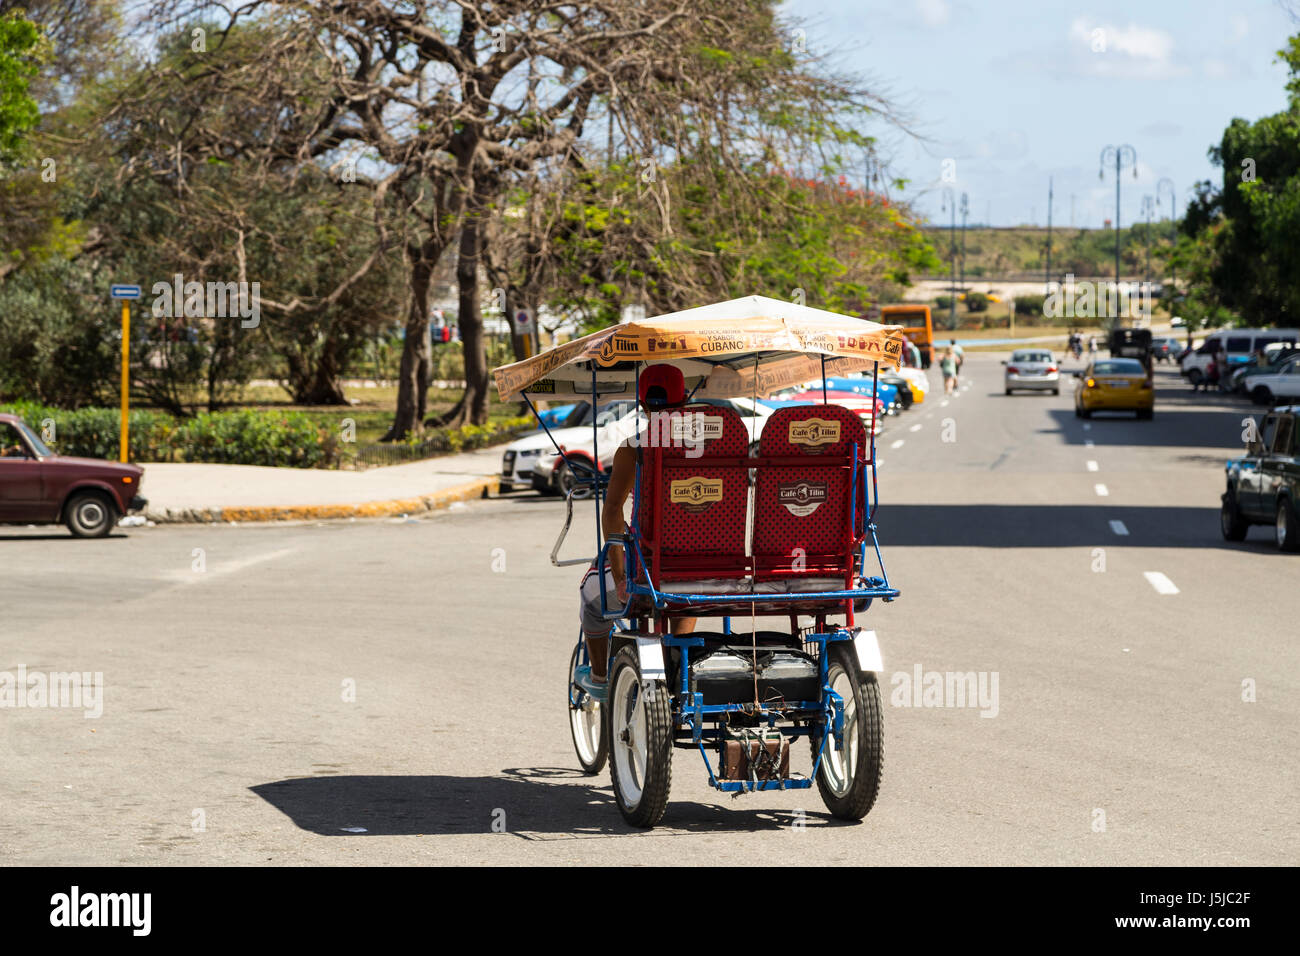 A bicycle rickshaw or bicycle taxi in Havana, Cuba Stock Photo